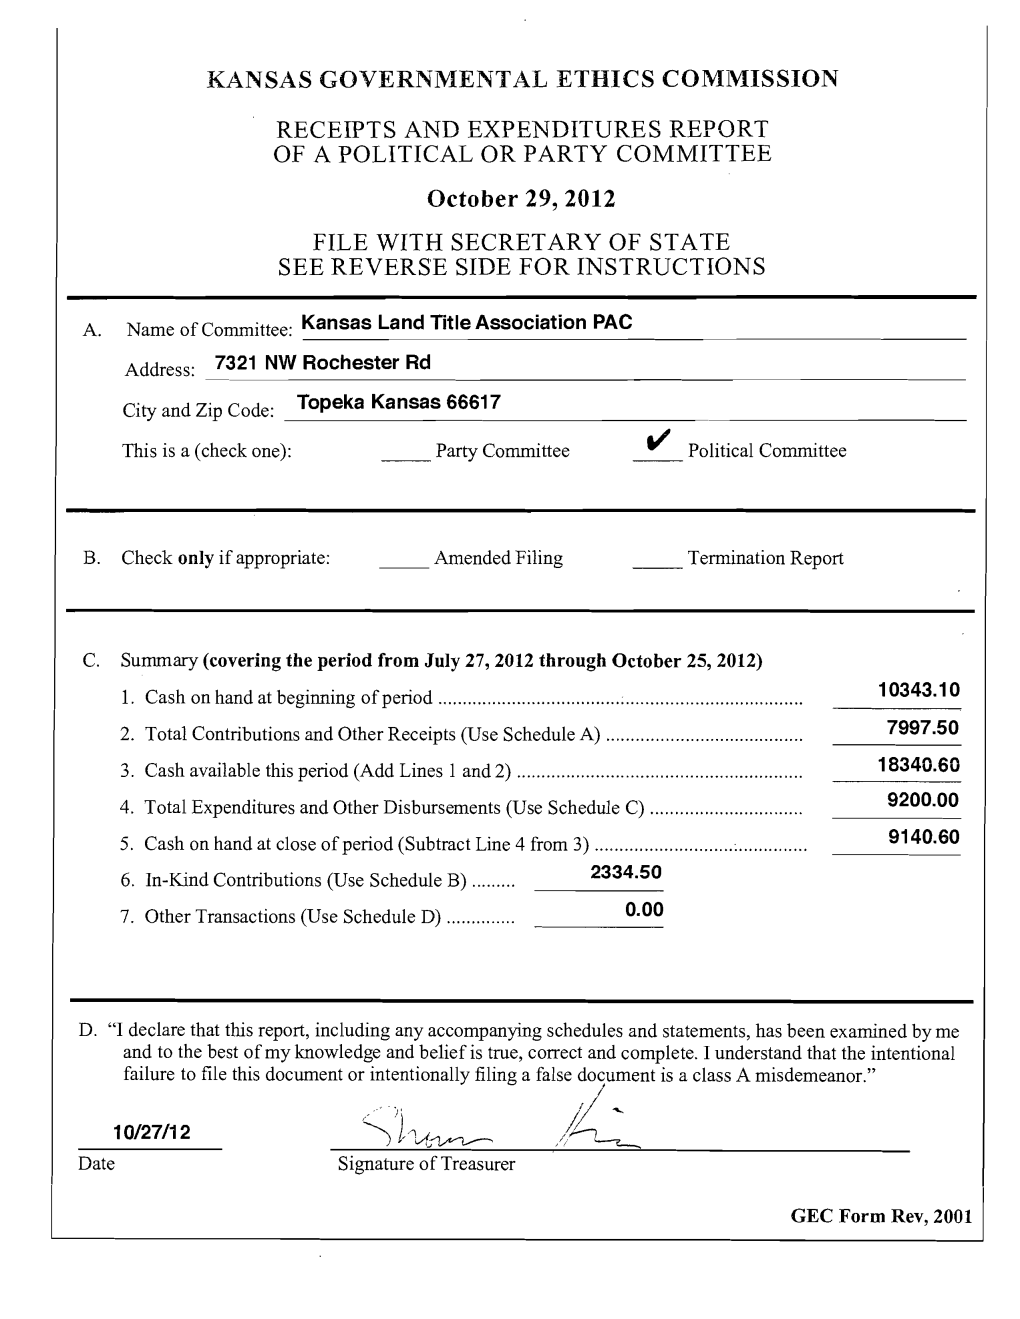 I" 10/27/12 '~)'Li~ L~ Date Signature of Treasurer